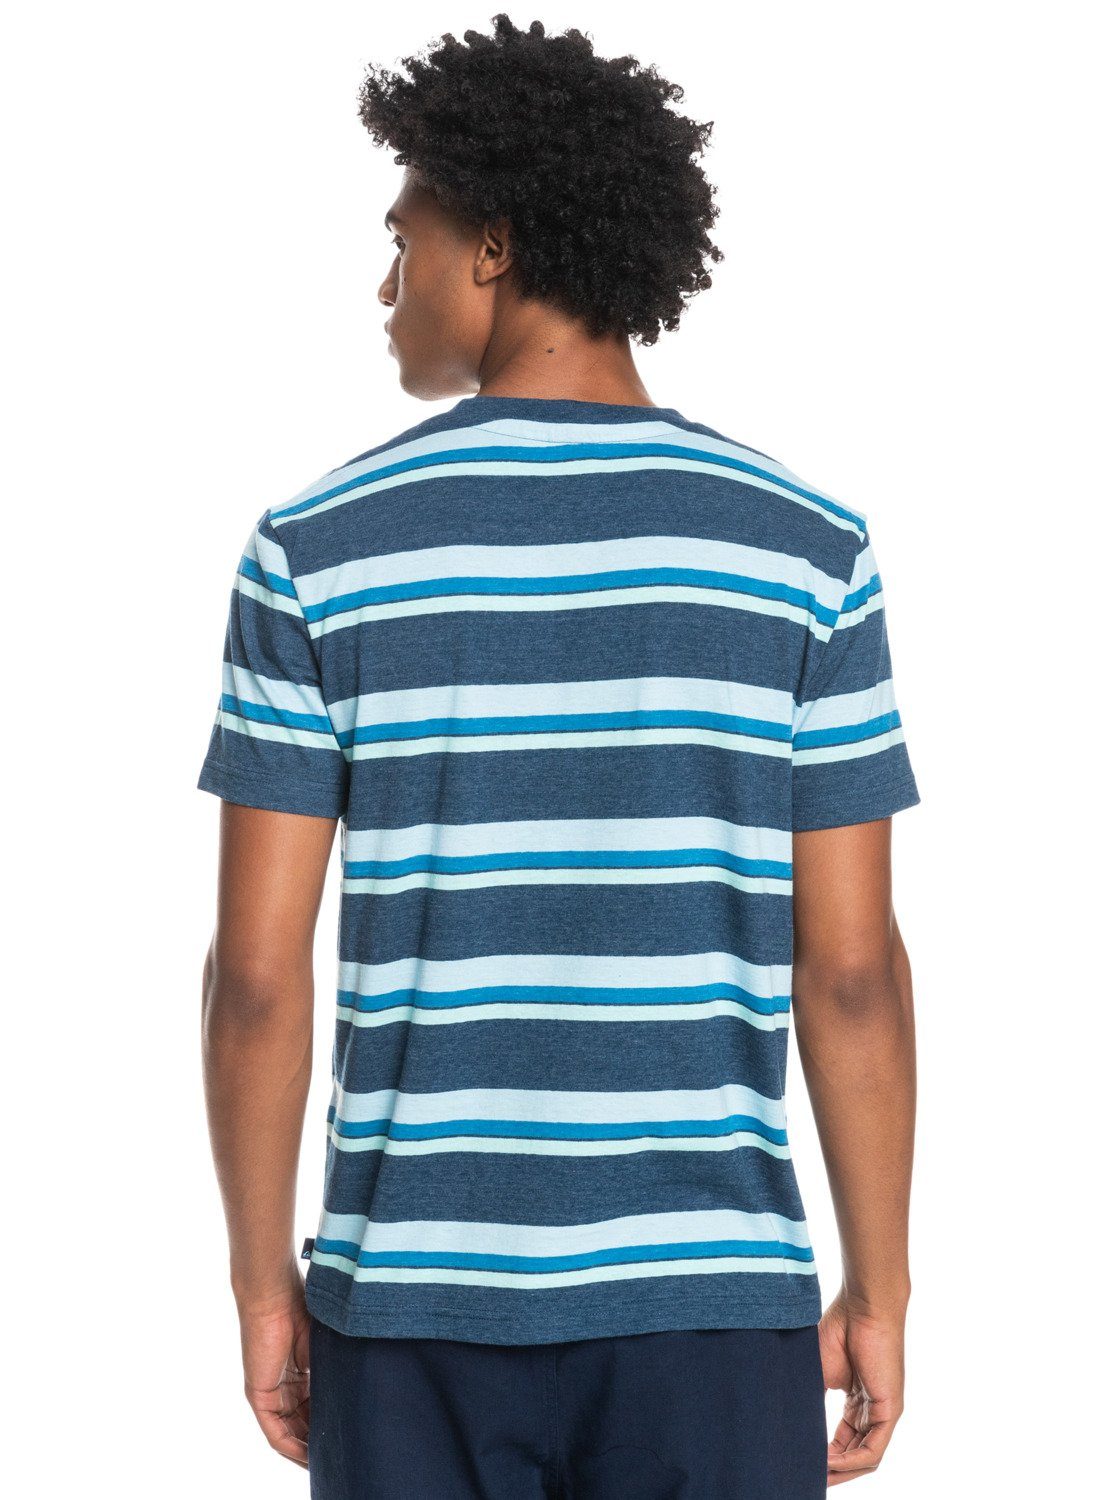 Quiksilver T-Shirt Between Waves Blue Between Insignia Waves